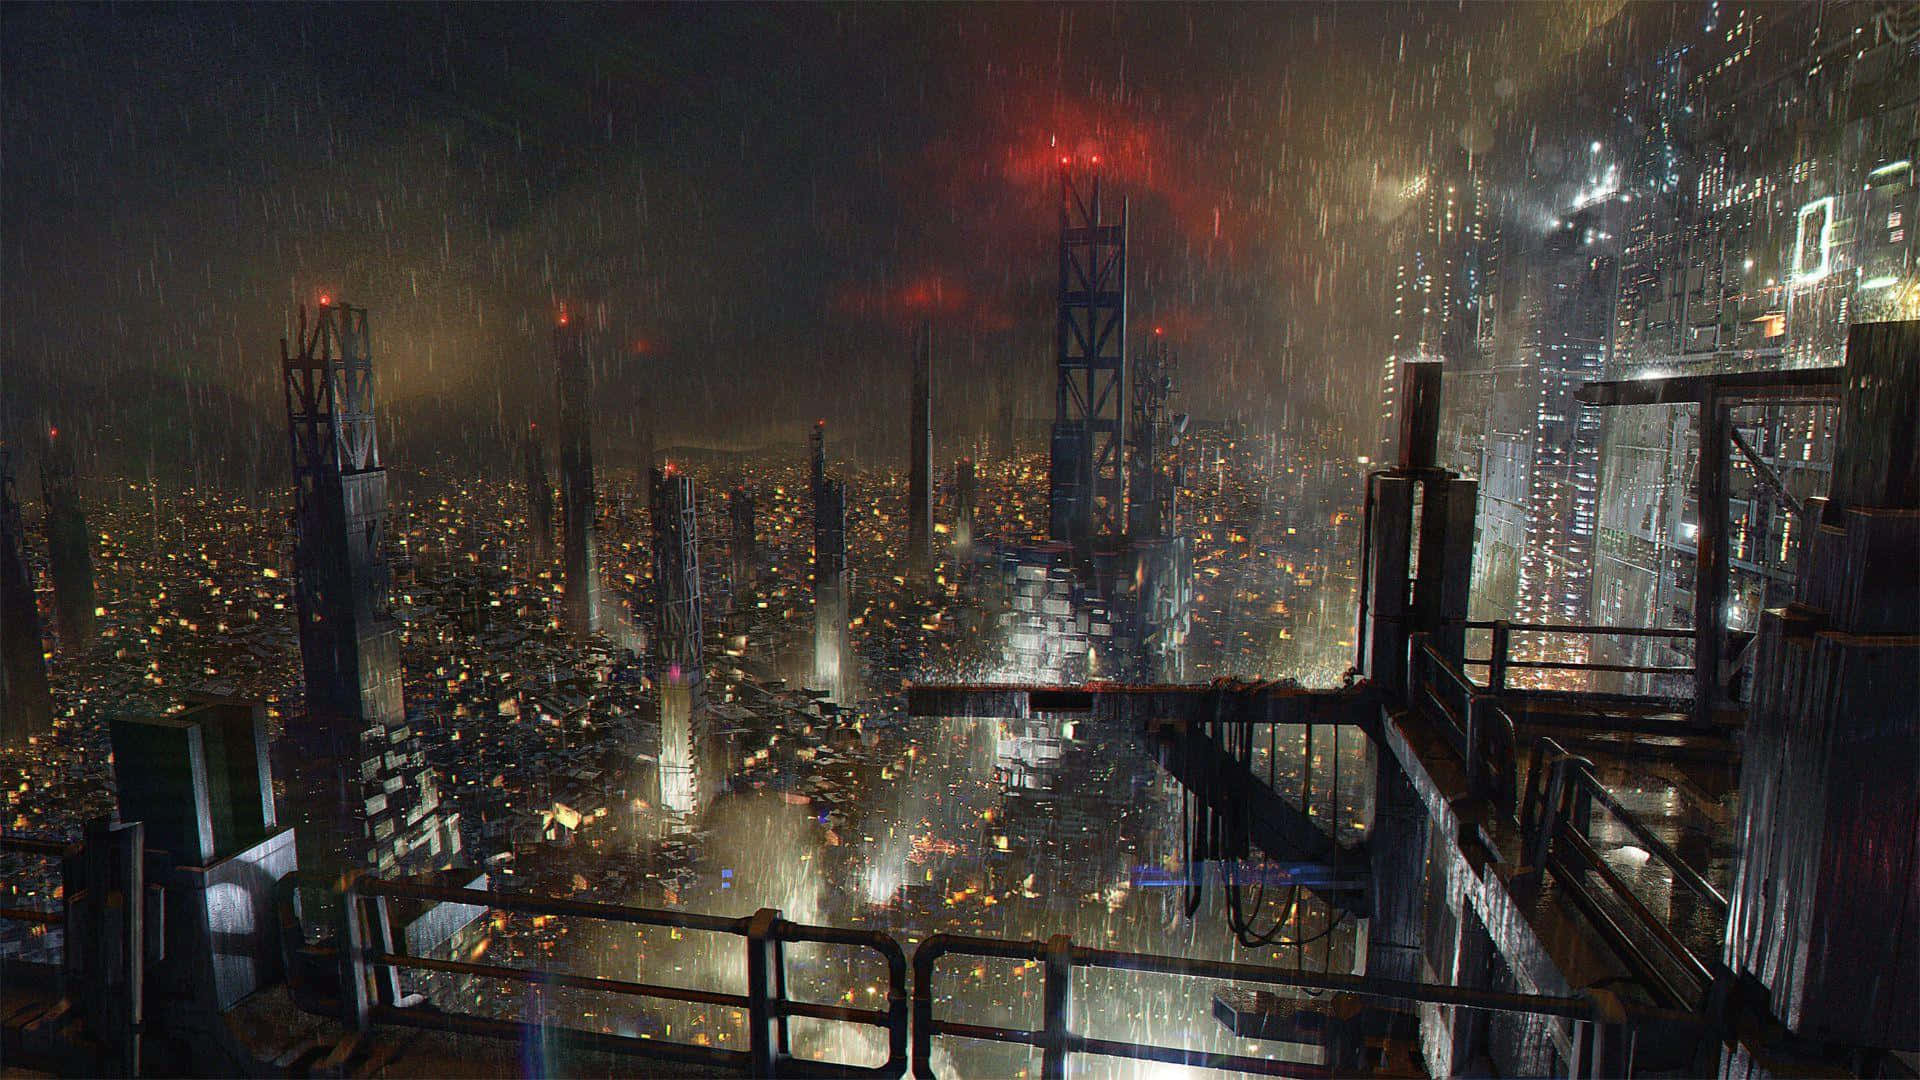 Explore the futuristic metropolis of Cyberpunk City